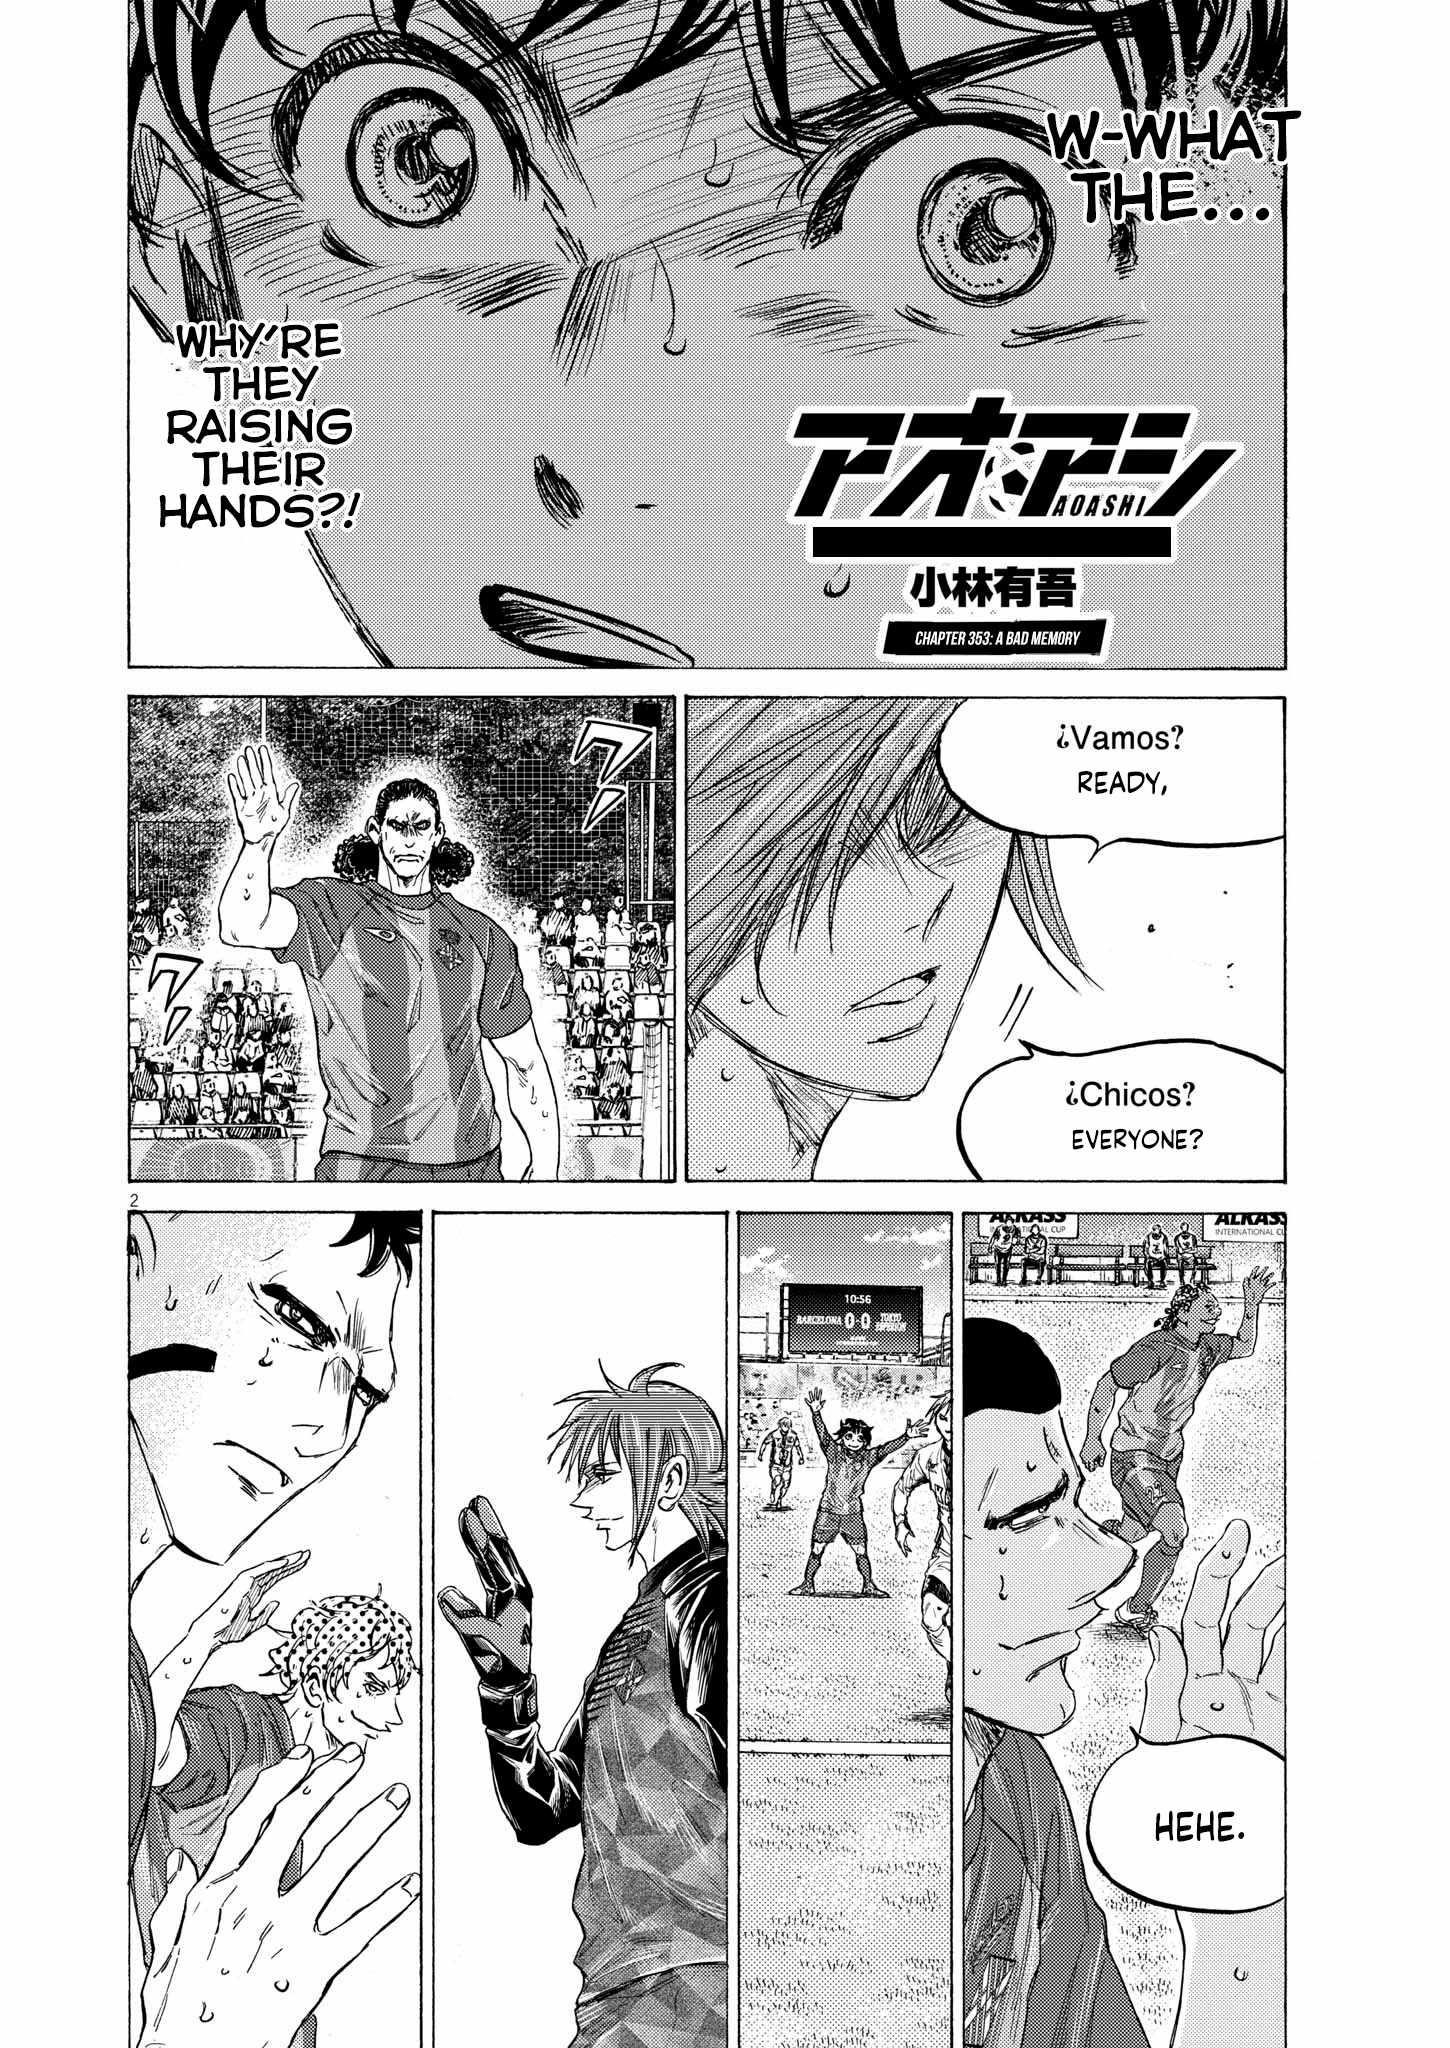 Read Manga Ao Ashi - Chapter 353